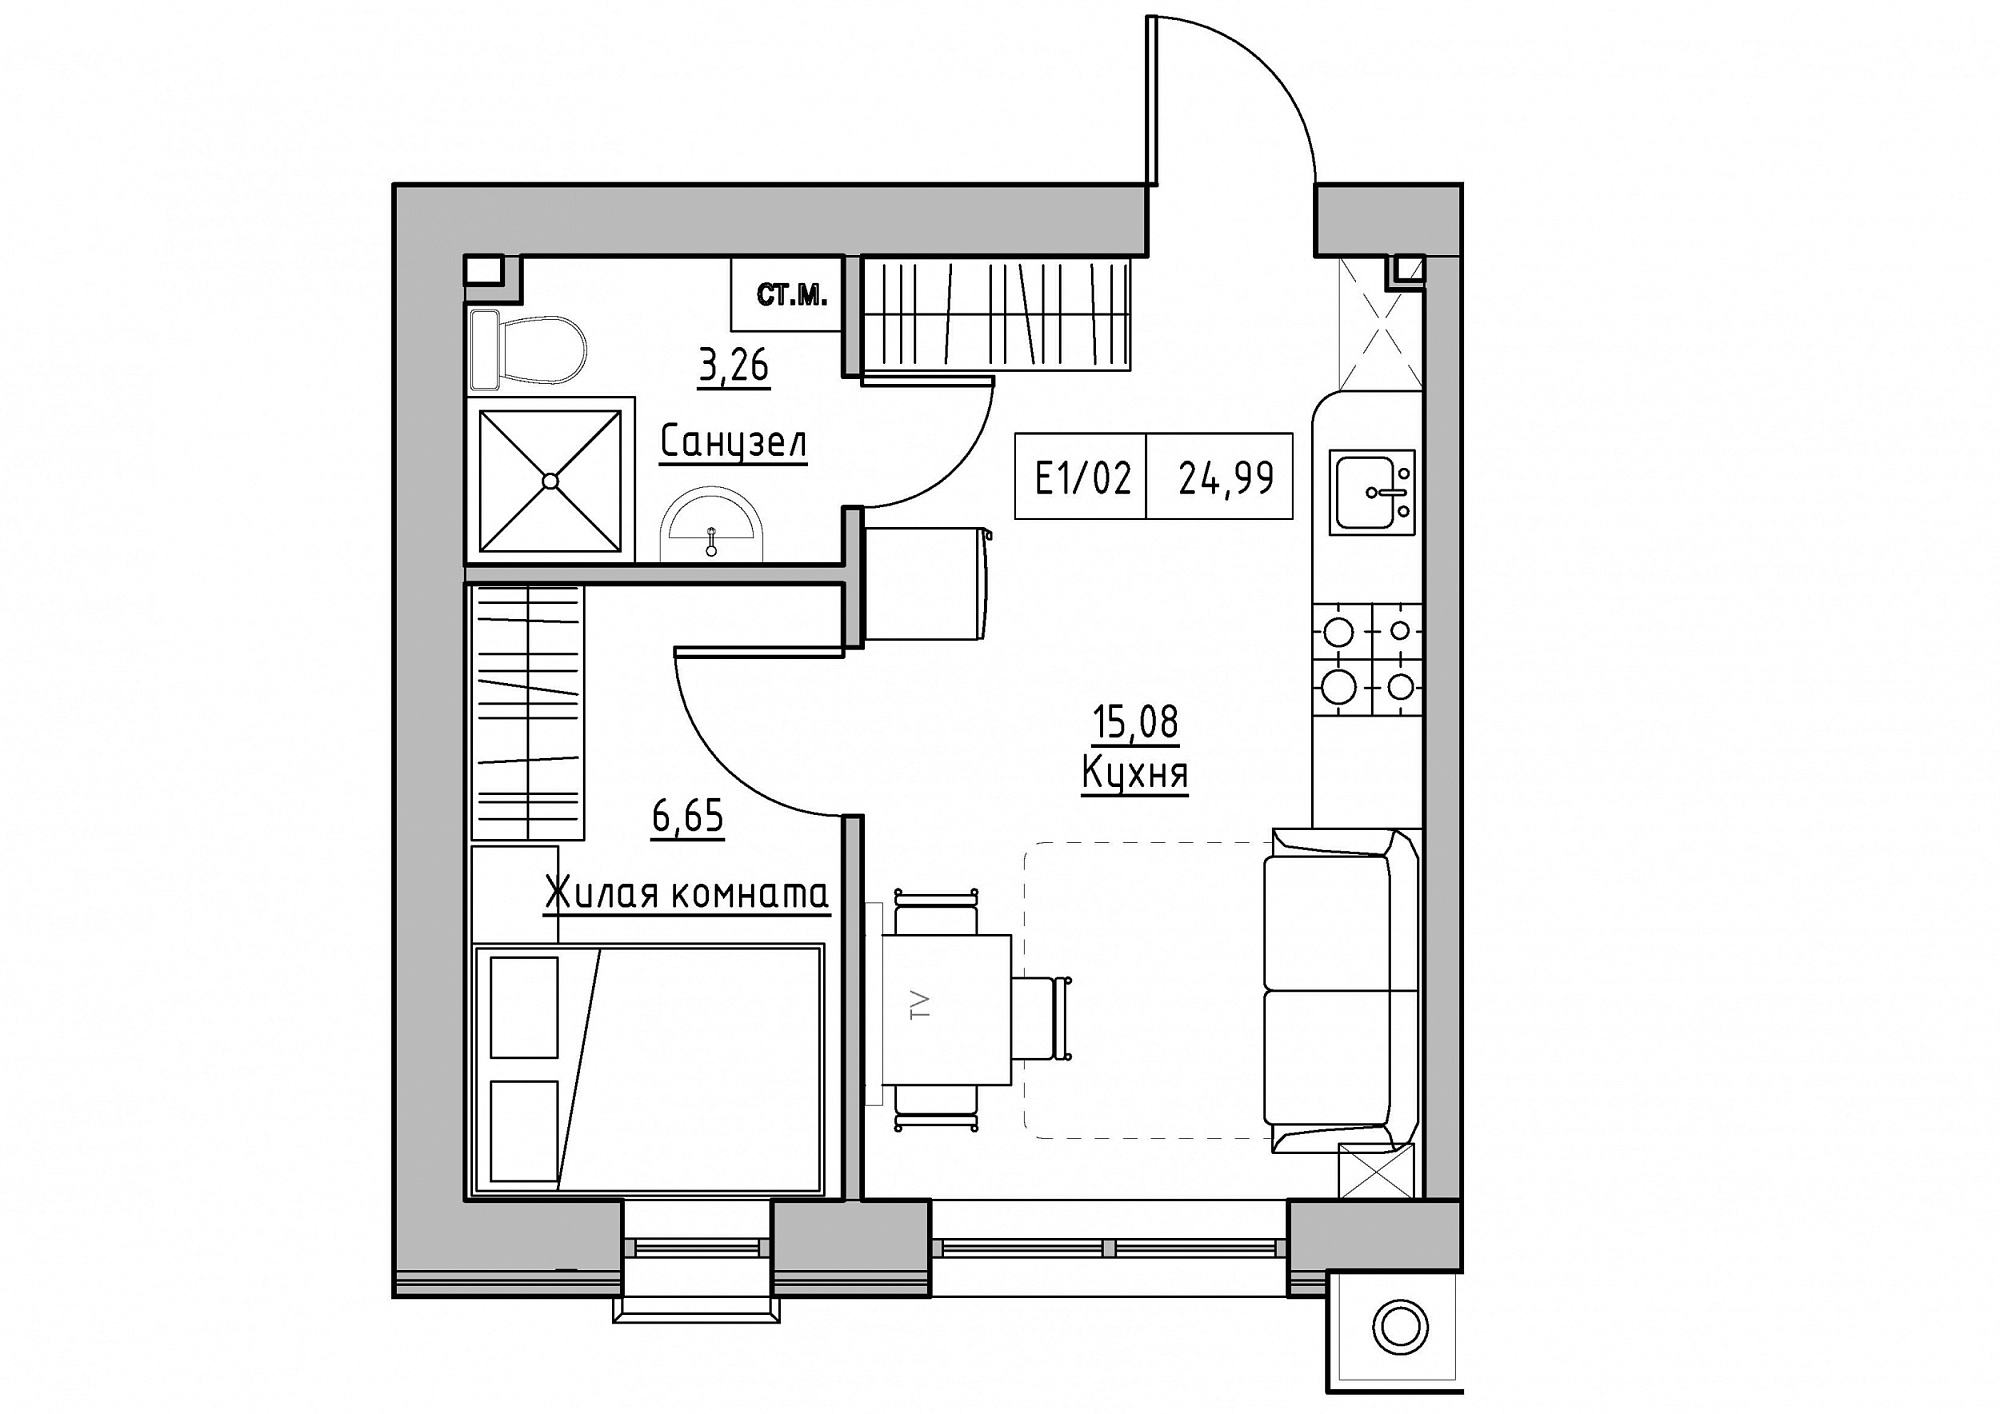 Planning 1-rm flats area 24.99m2, KS-011-01/0012.